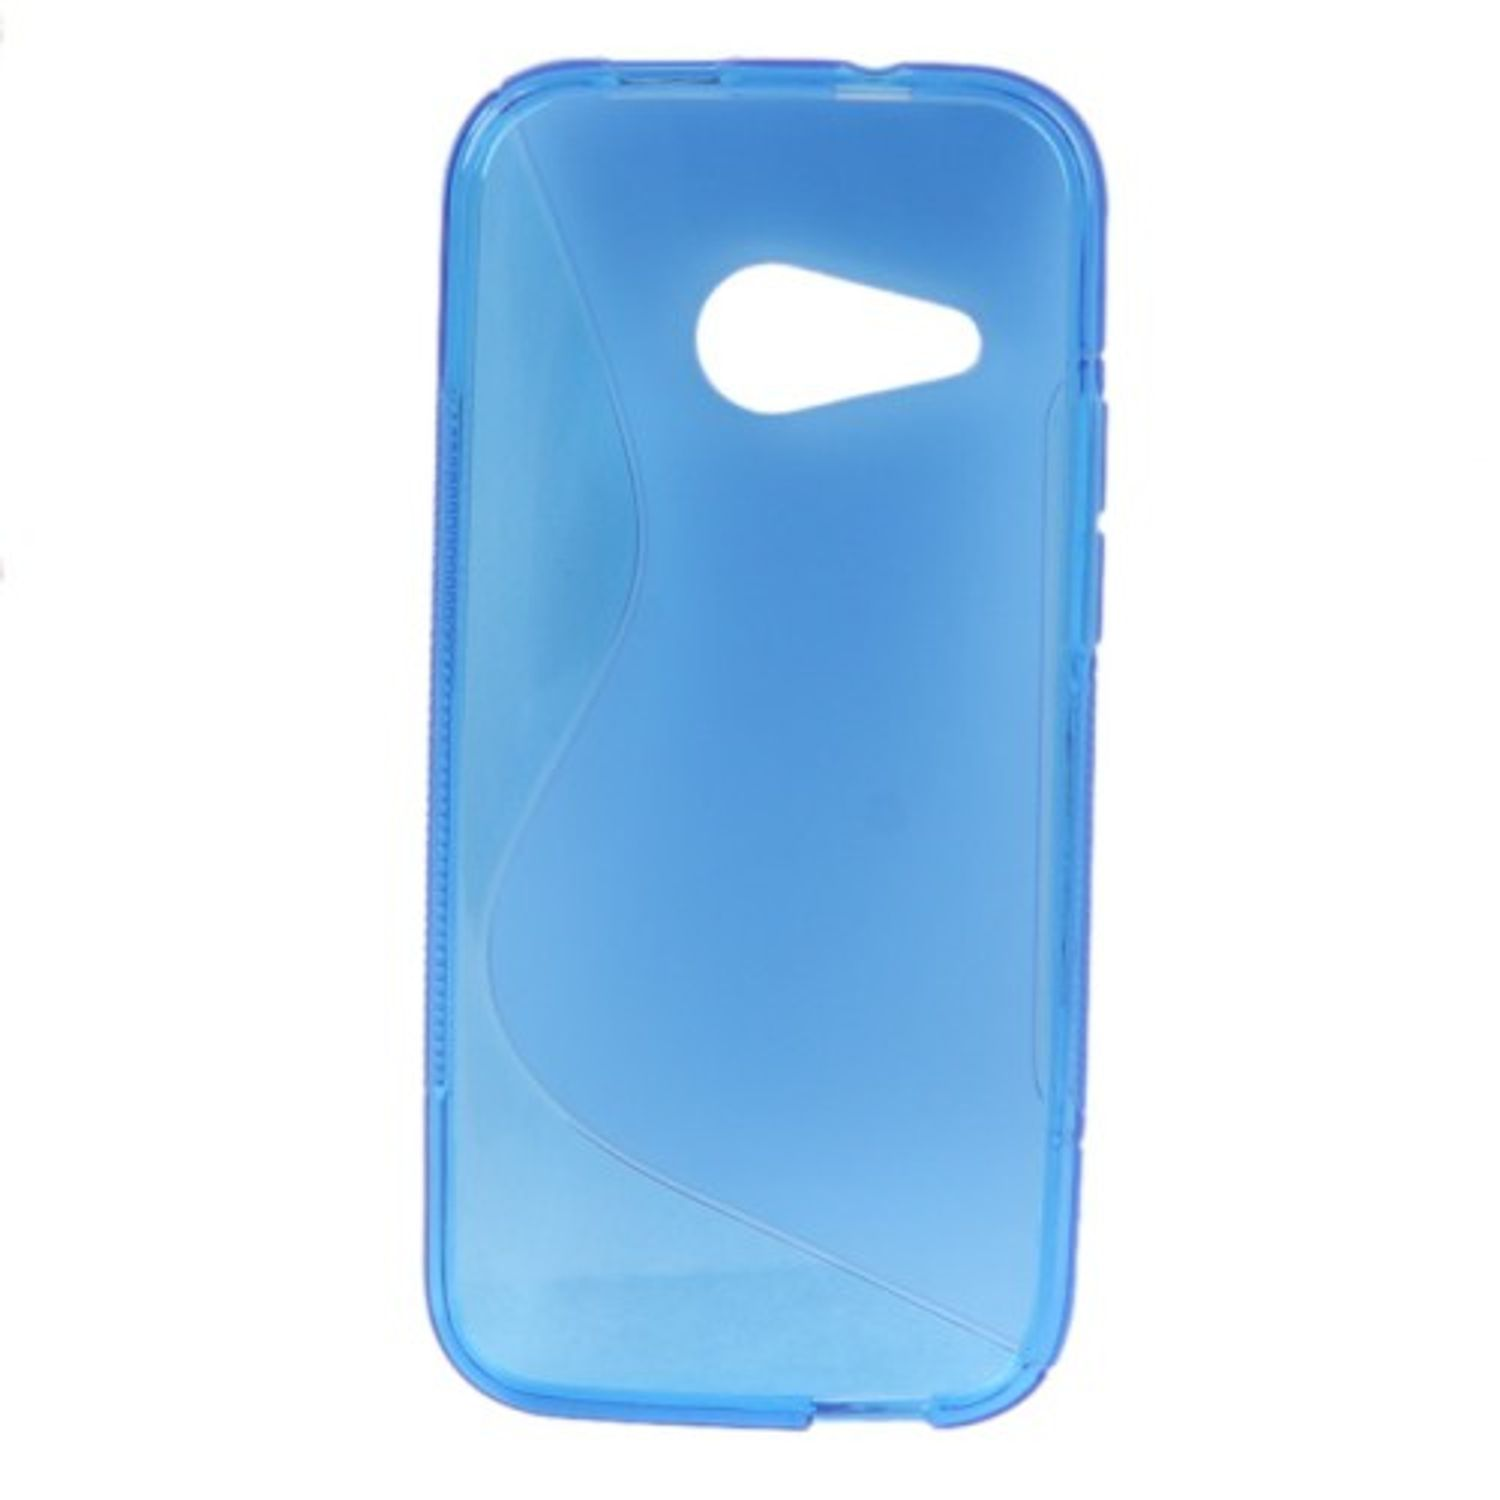 HTC, KÖNIG One mini 2, Blau Handyhülle, DESIGN Backcover,